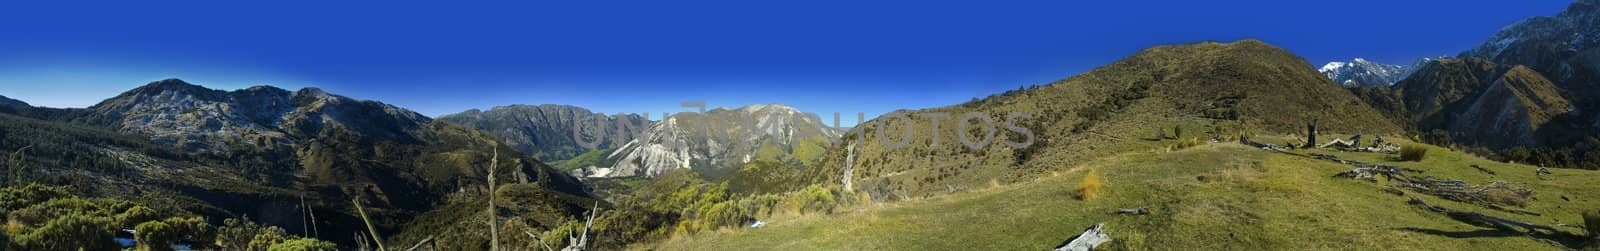 Seaward mountain range near Kiakora in New Zealands South Island 